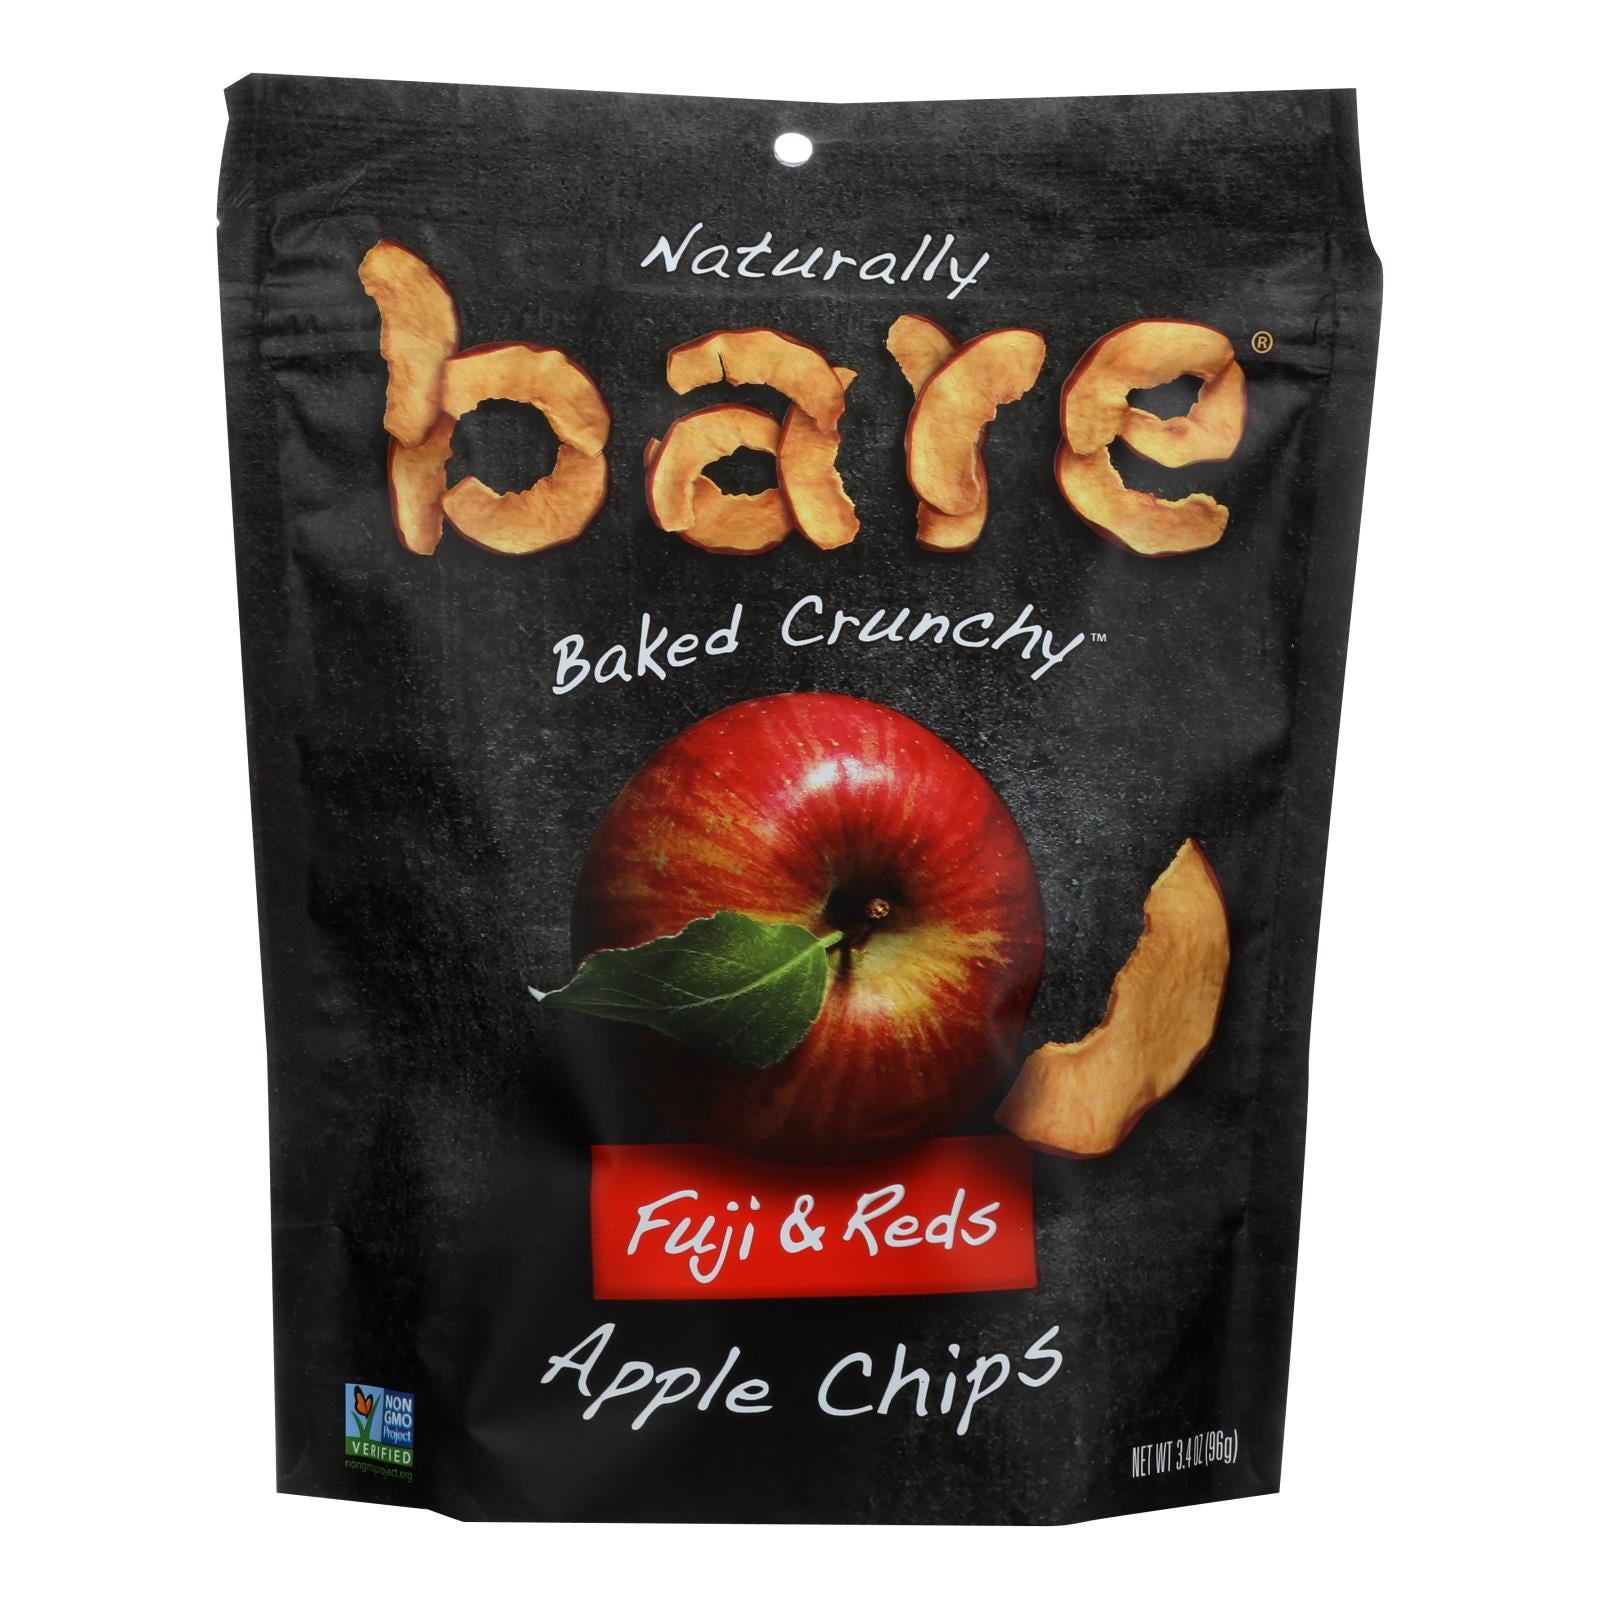 Bare Fruit, Bare Fruit Apple Chips - Fuji & Reds - Case of 12 - 3.4 oz (Pack of 12)